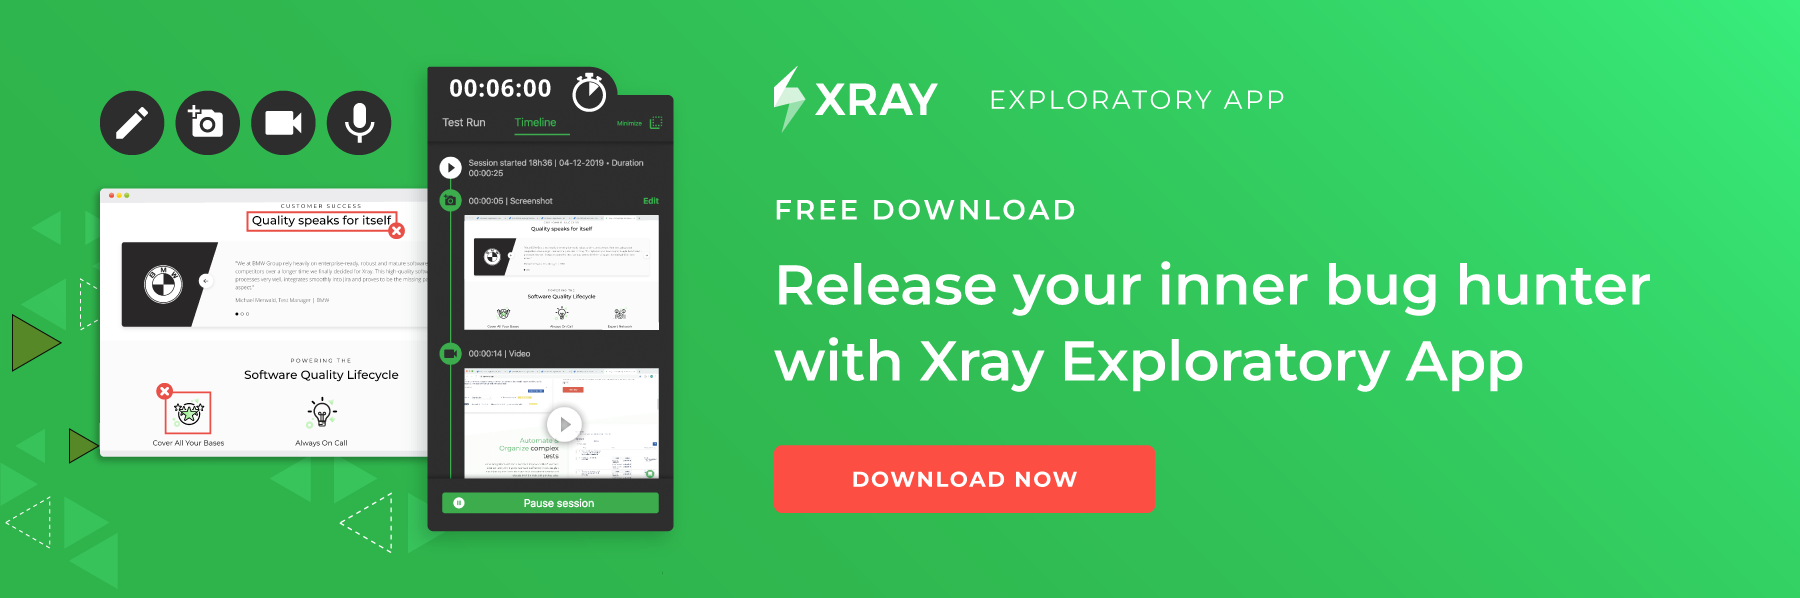 Xray Exploratory App for exploratory testing